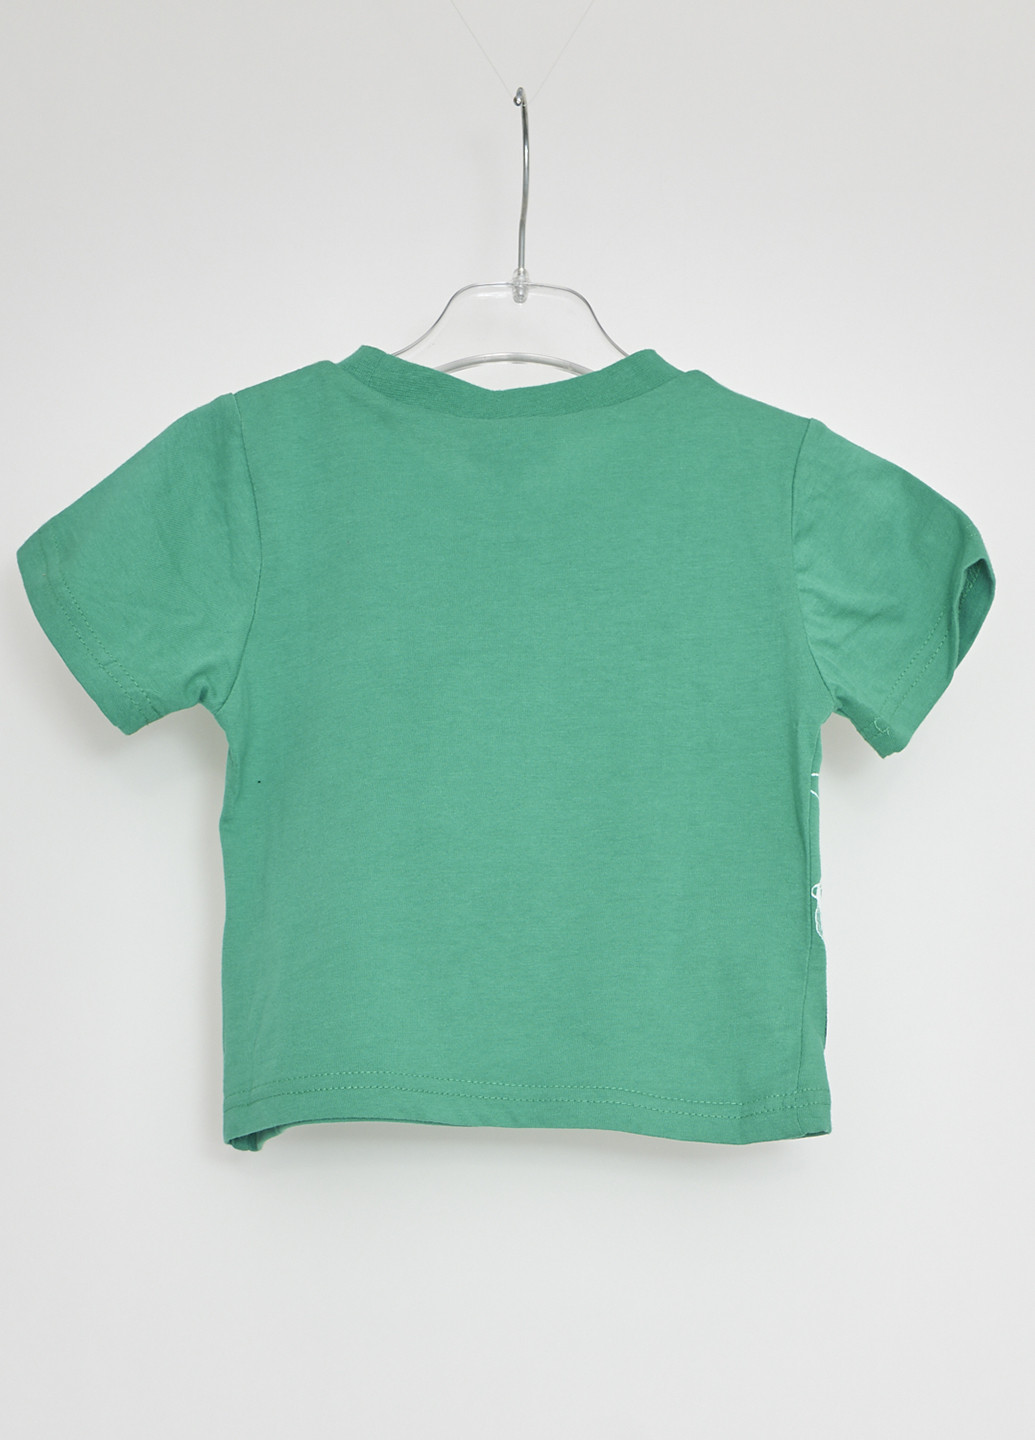 Зеленая летняя футболка Mandarino